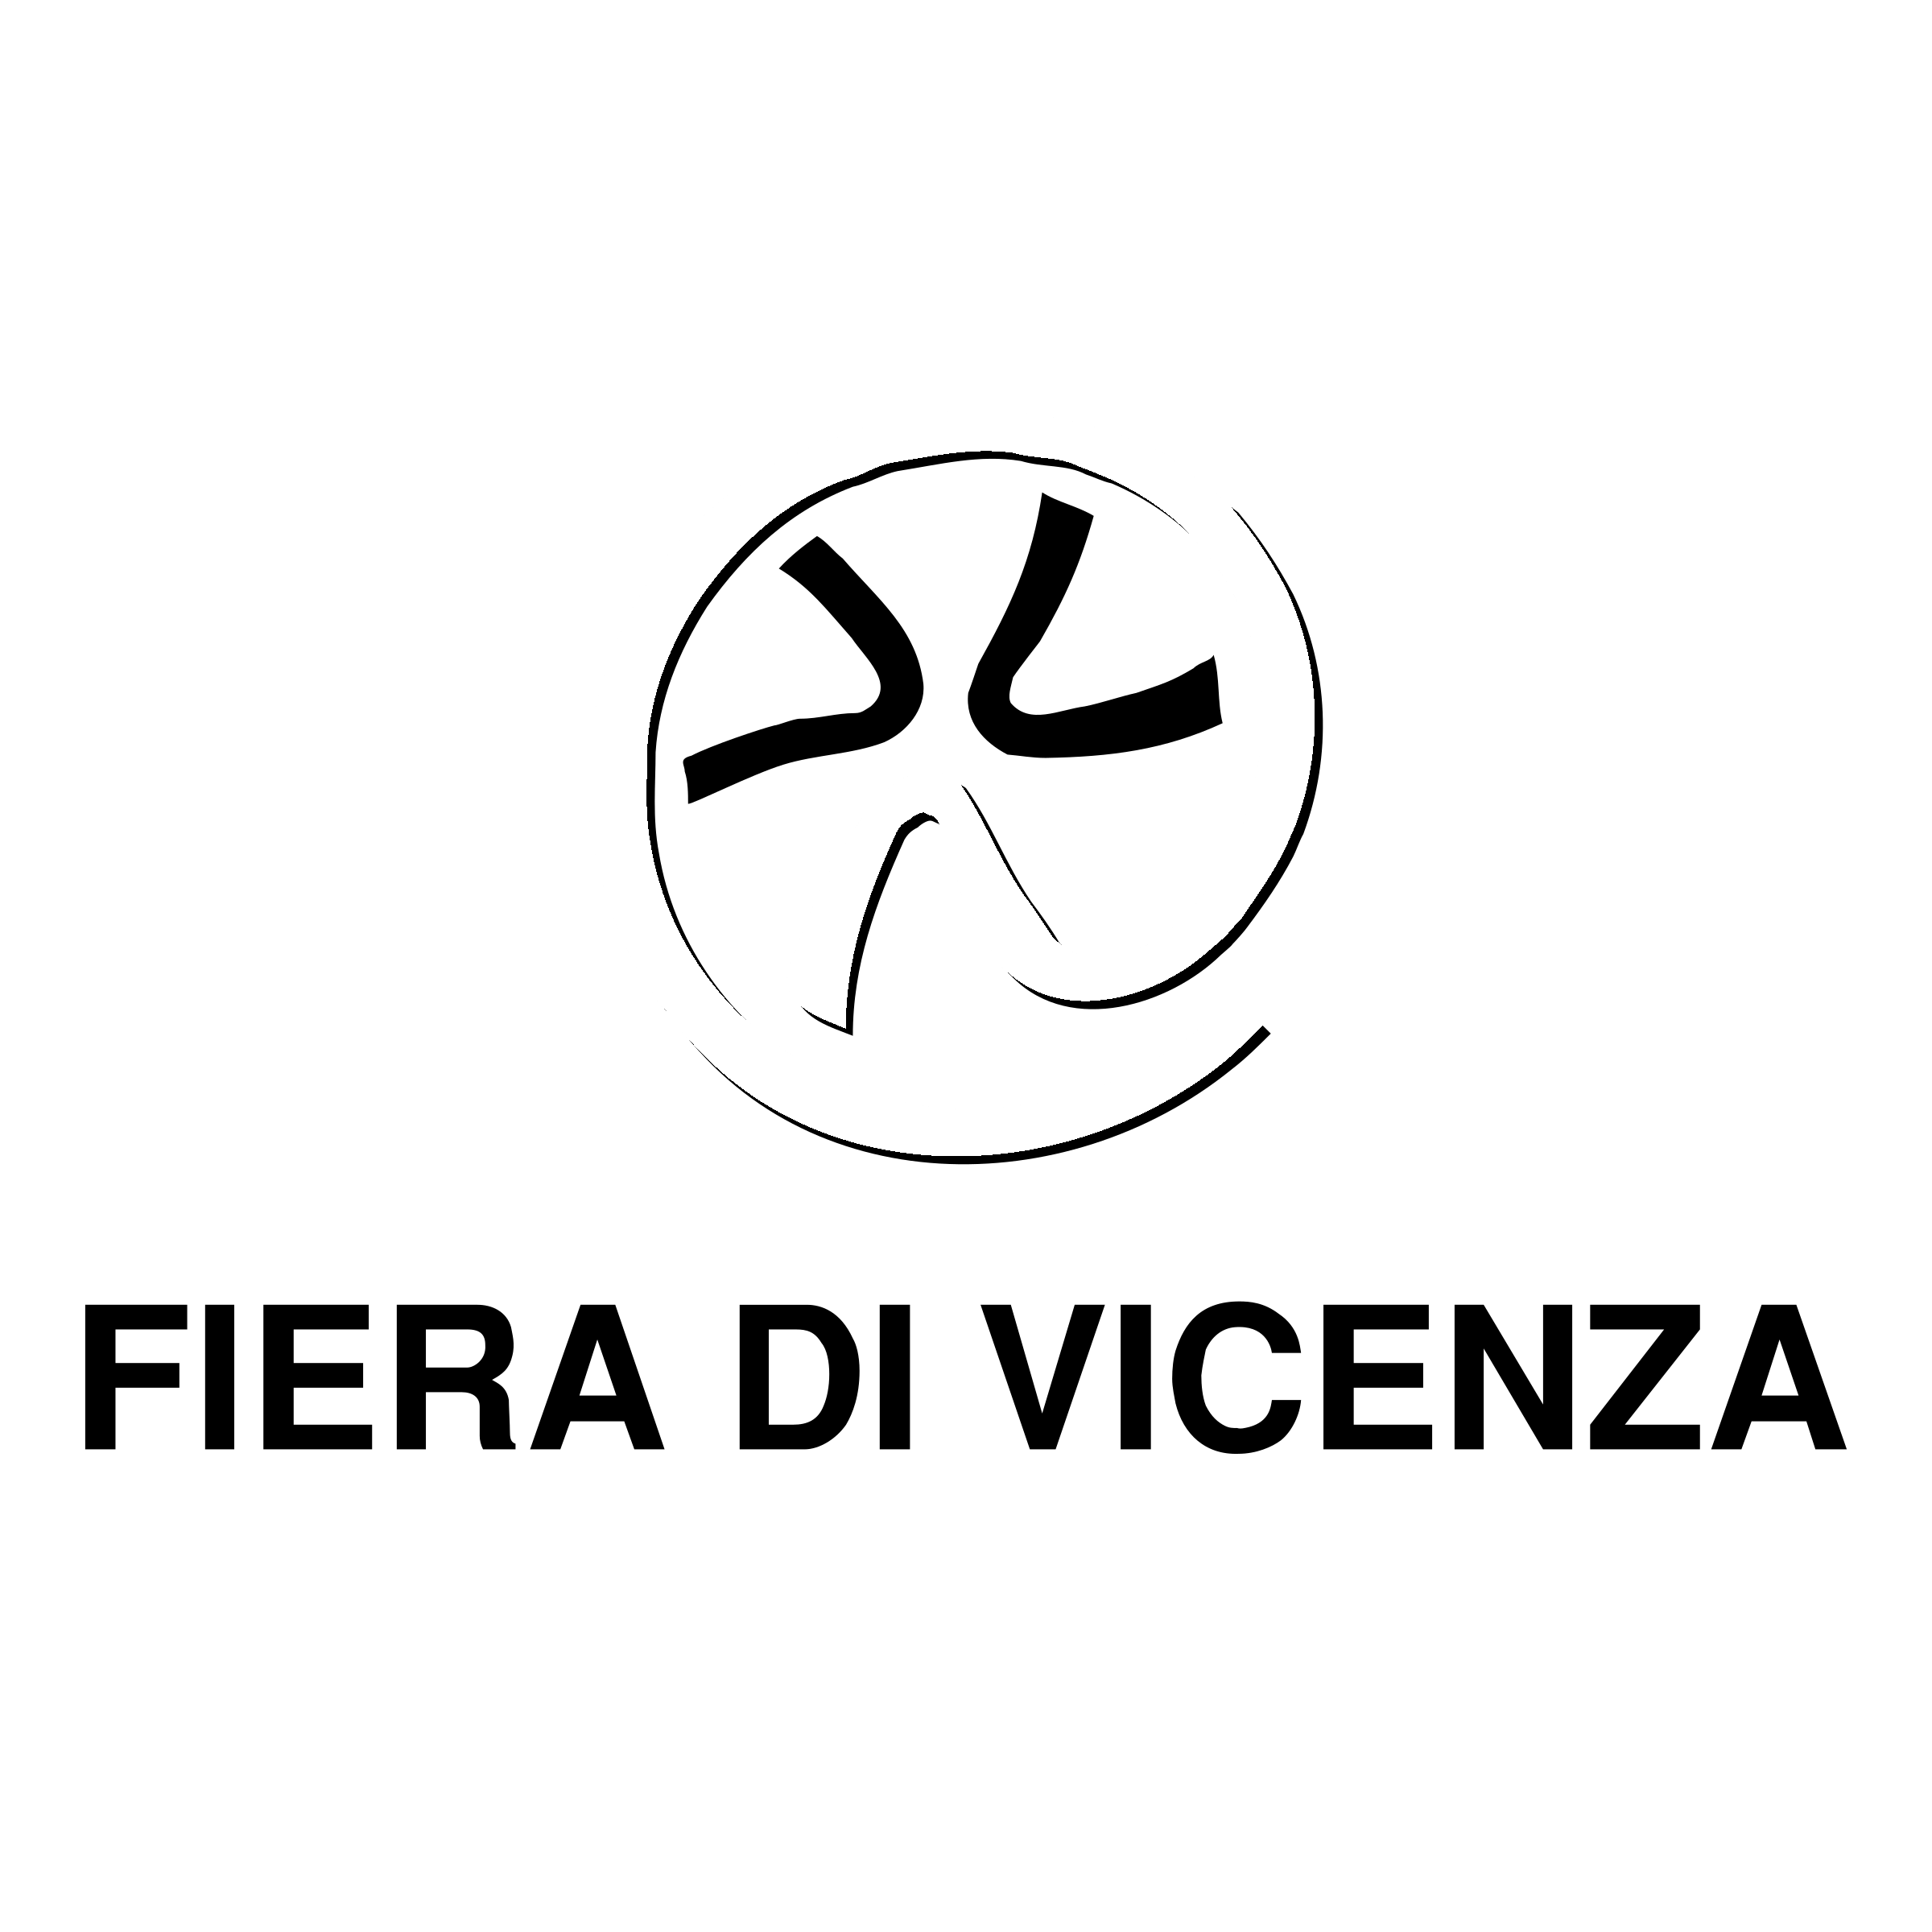 Vicenza Logo - Fiera Di Vicenza Logo PNG Transparent & SVG Vector - Freebie Supply